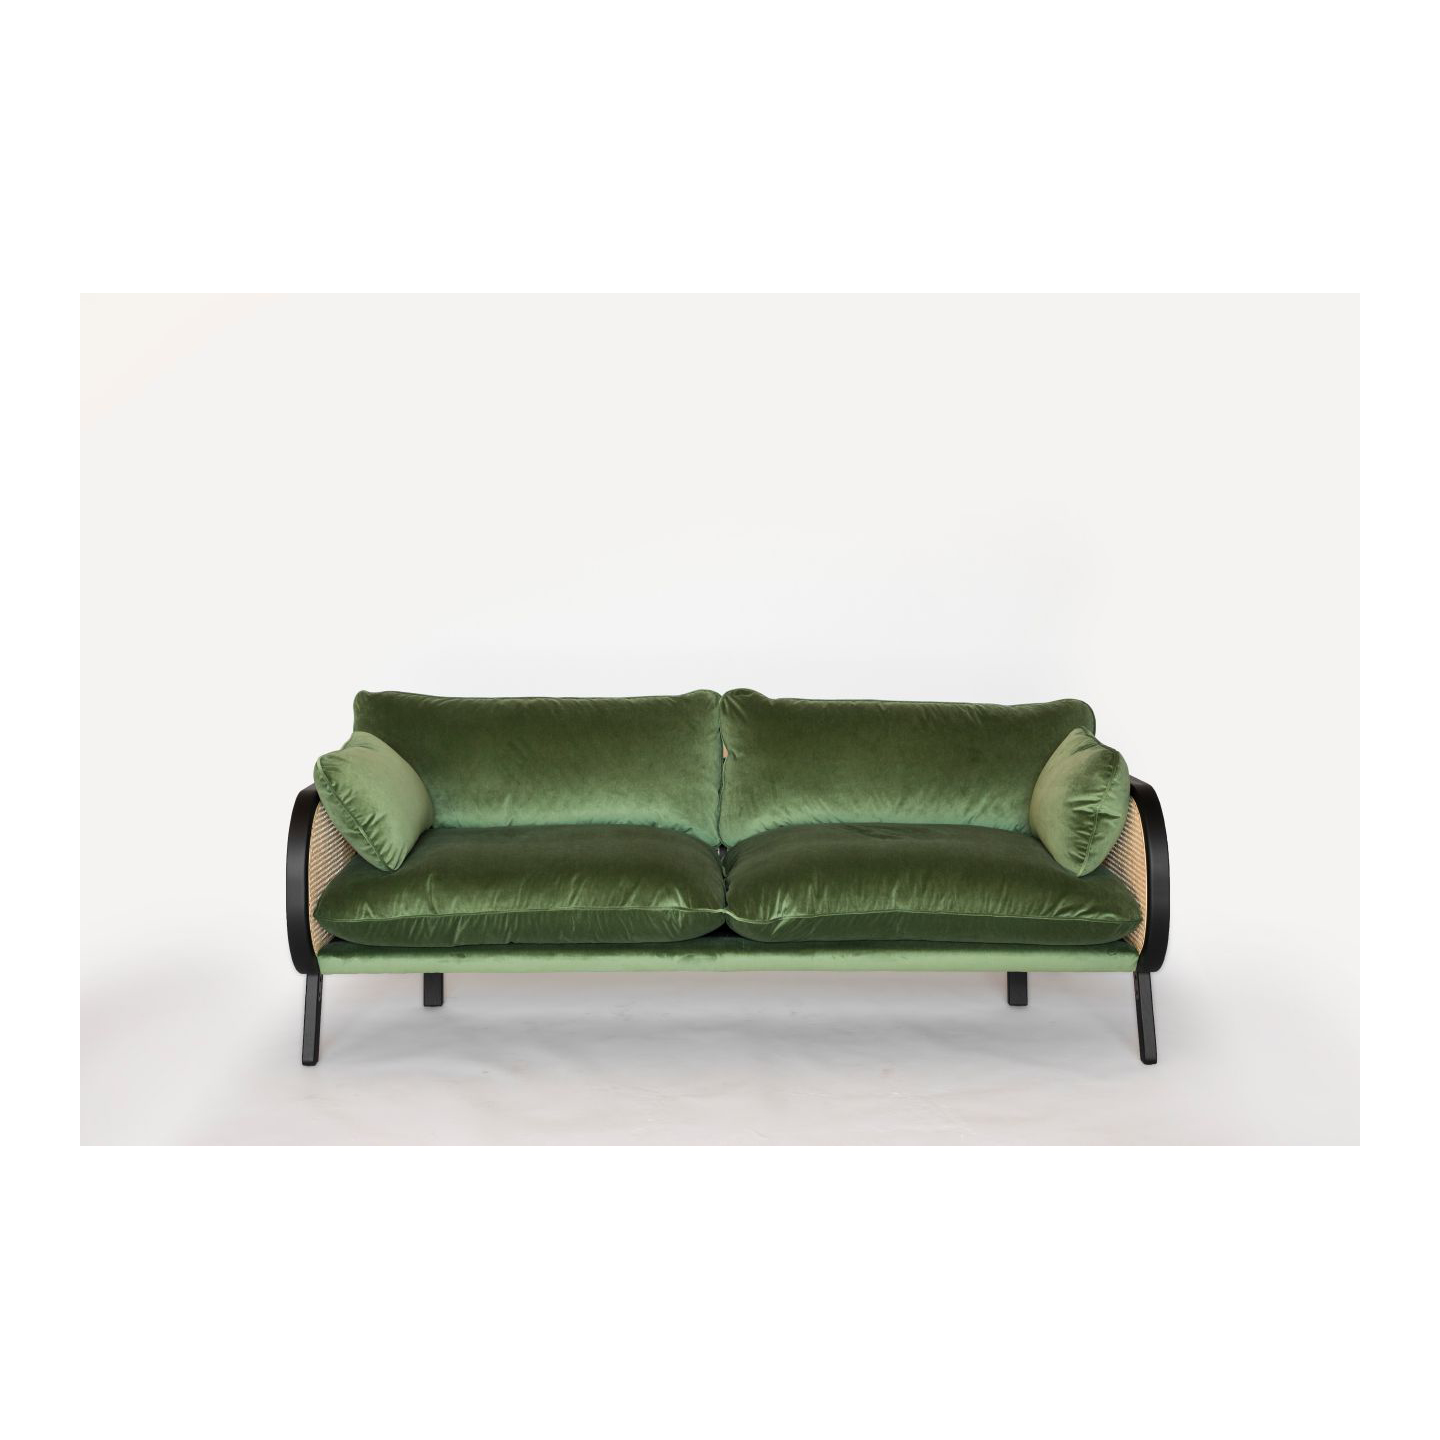 Haworth Buzzicane sofa in green velvet , front view